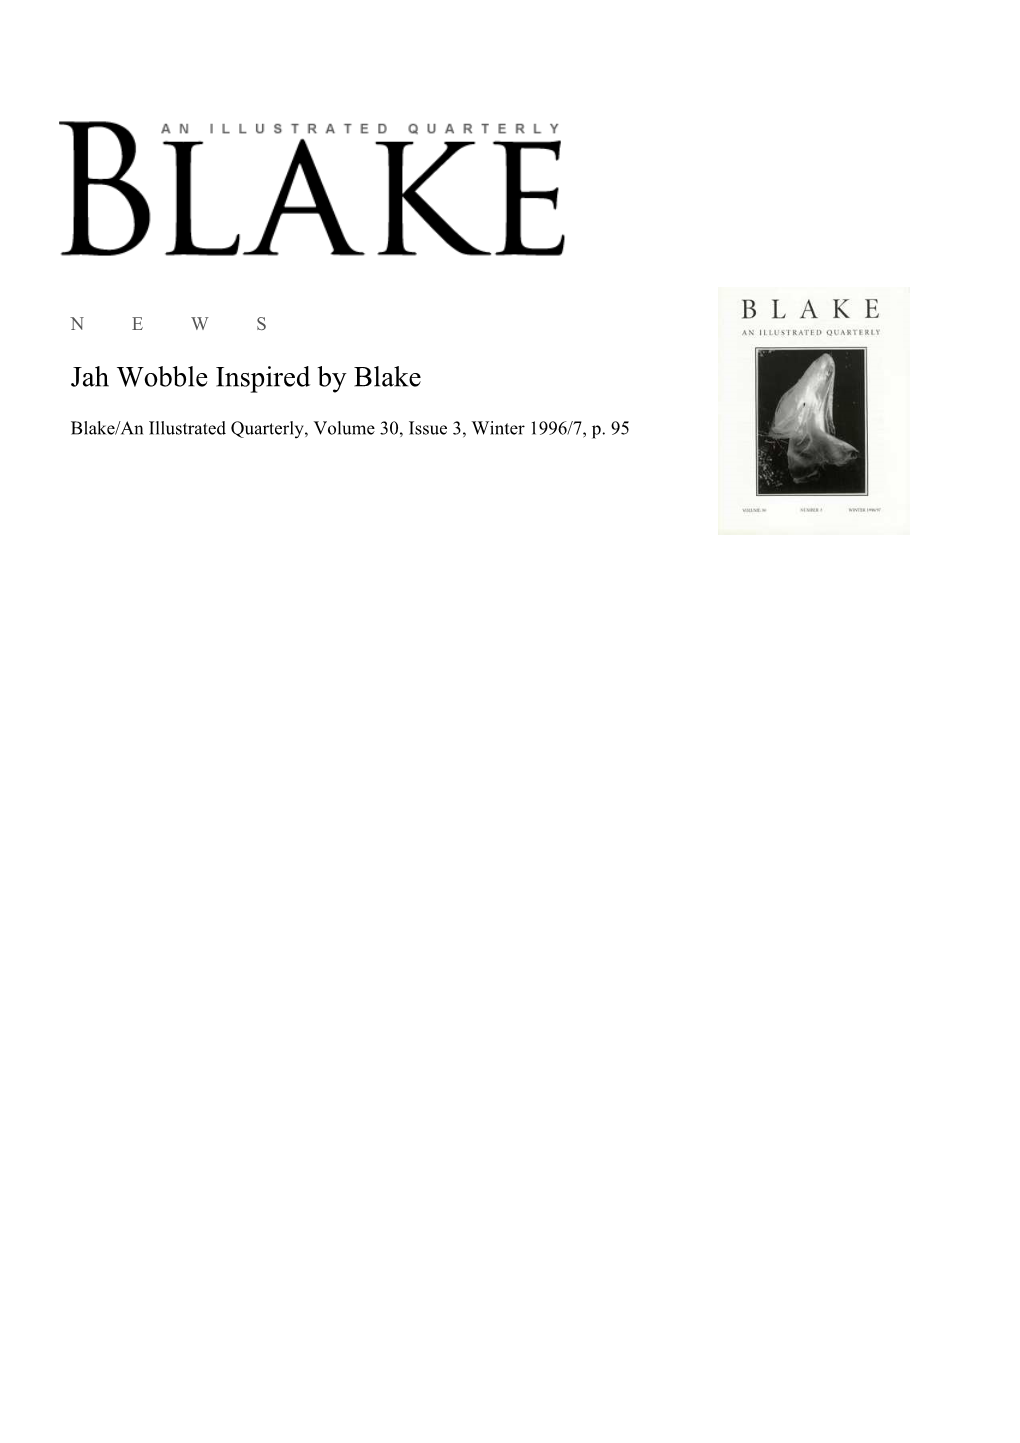 Jah Wobble Inspired by Blake